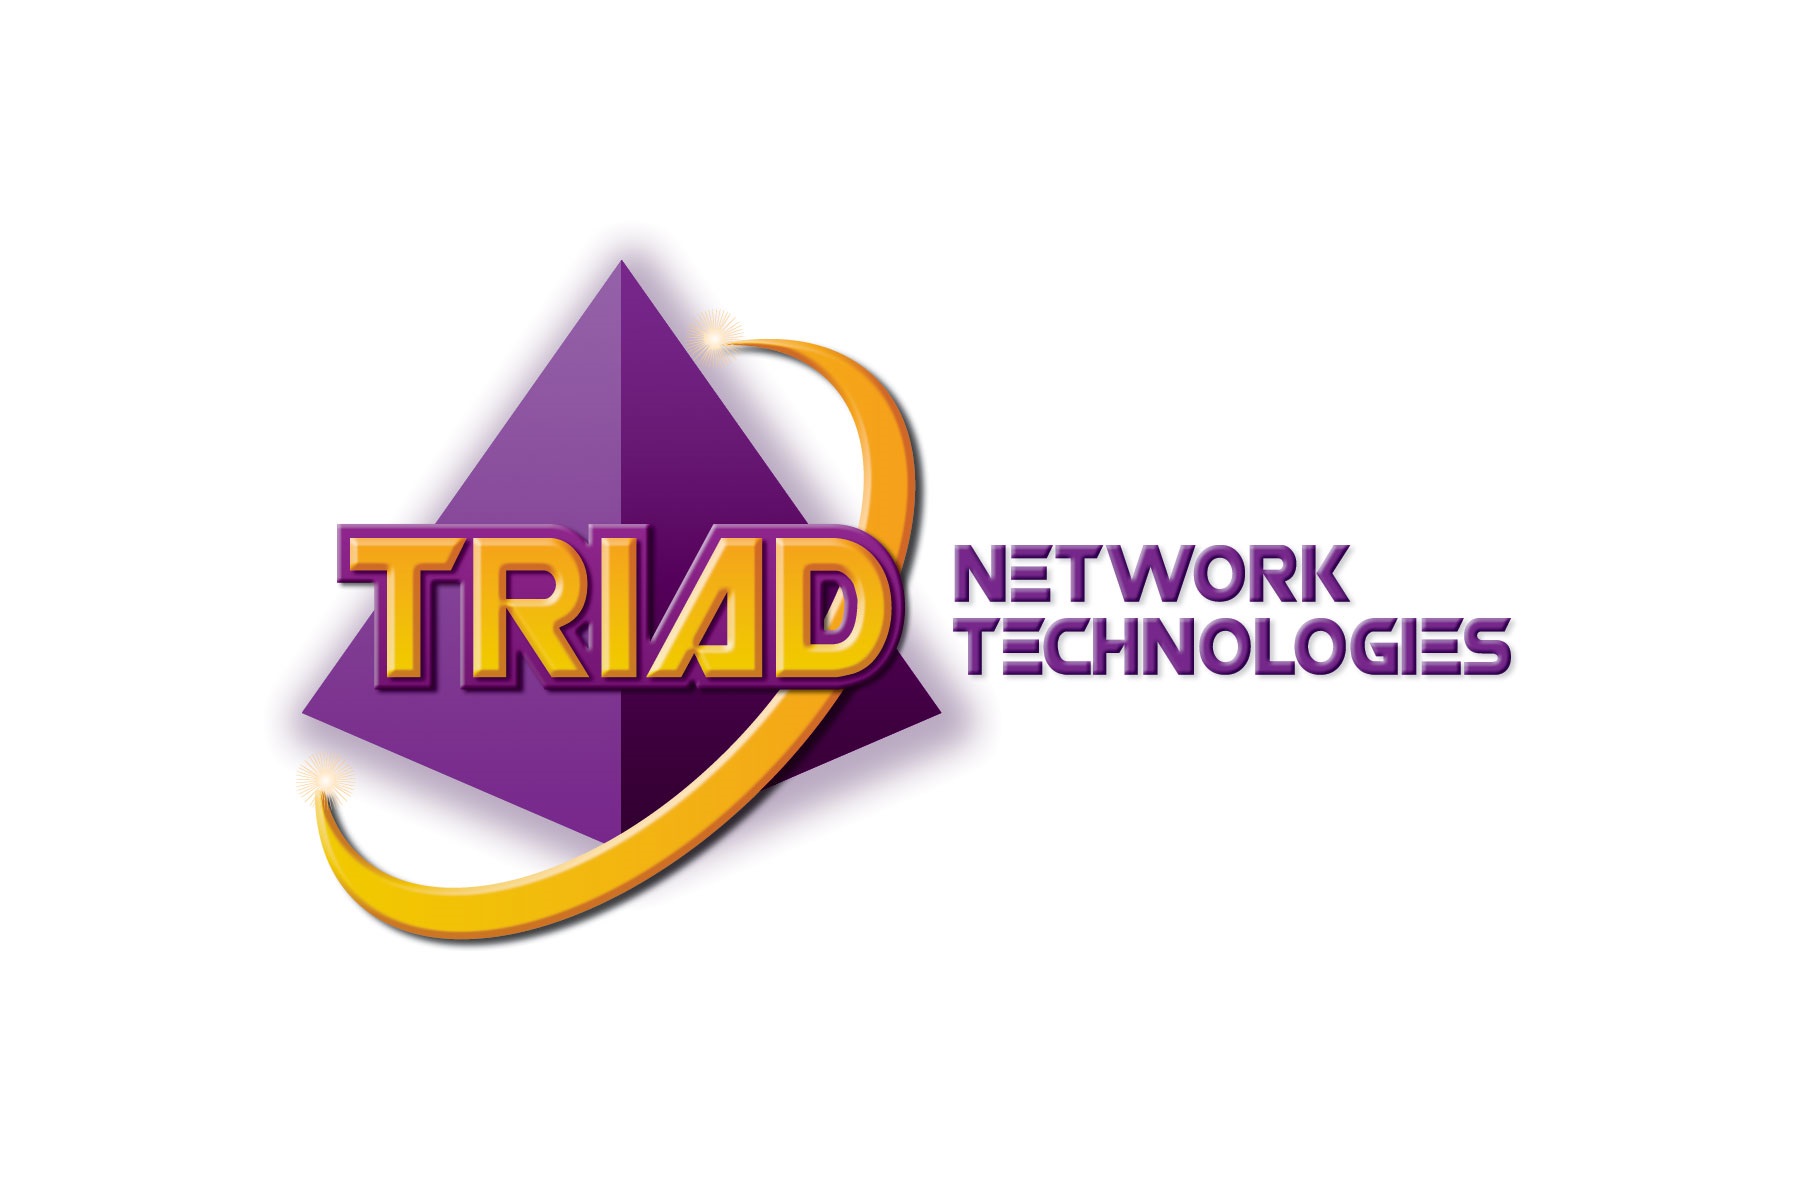 Triad Network Technologies